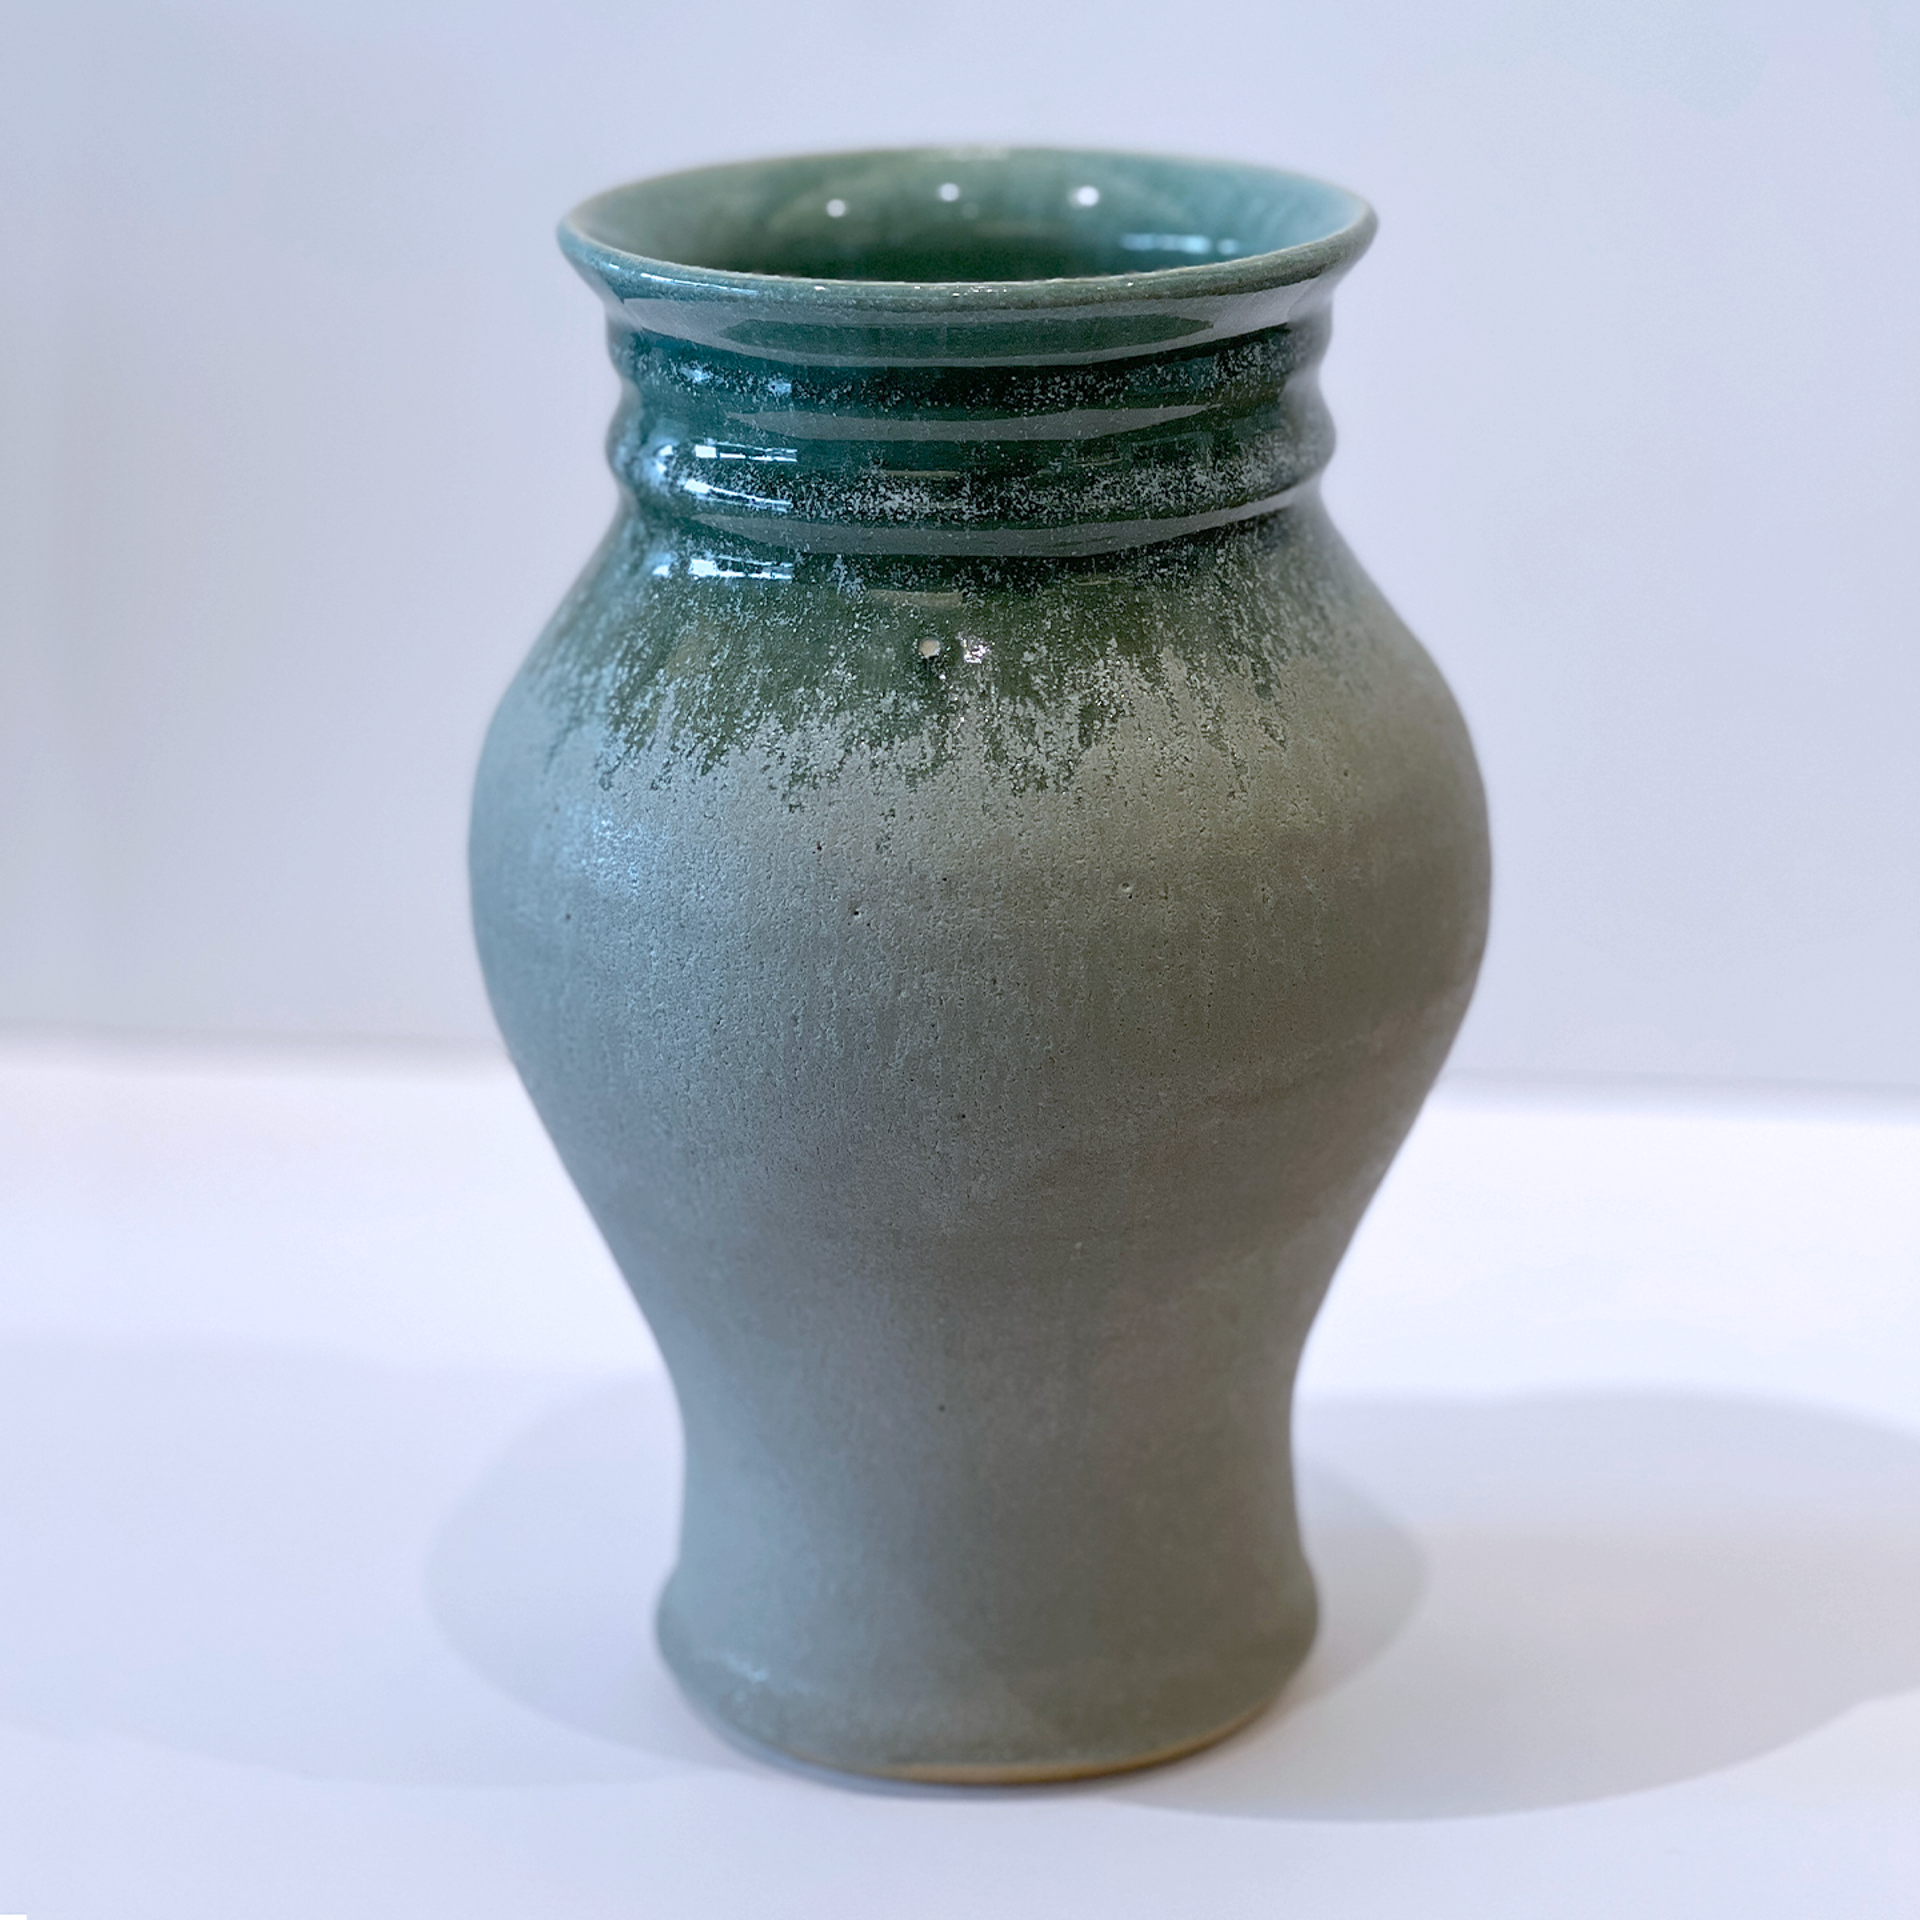 Vase 18 by David LaLomia